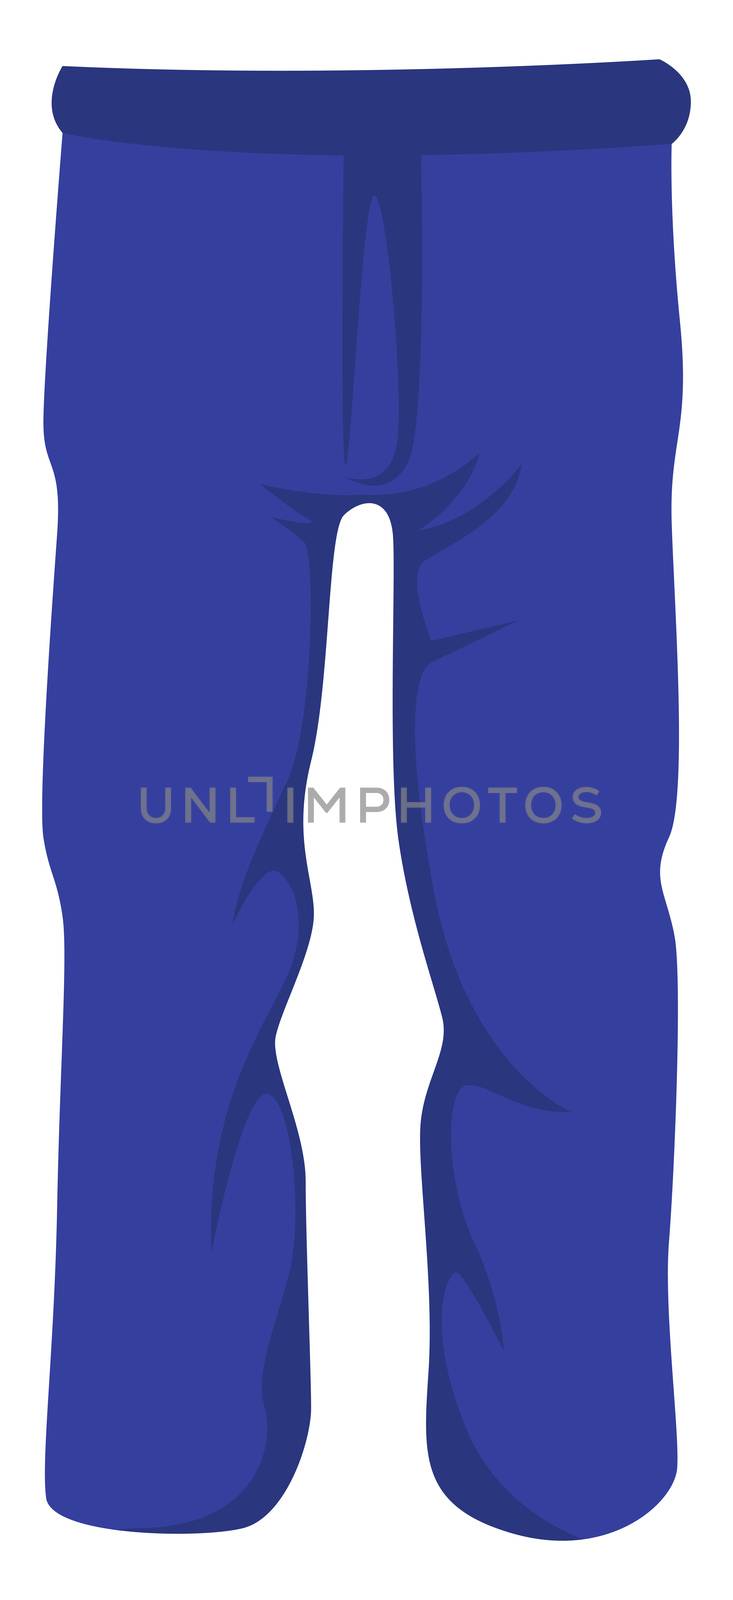 Man blue jeans, illustration, vector on white background